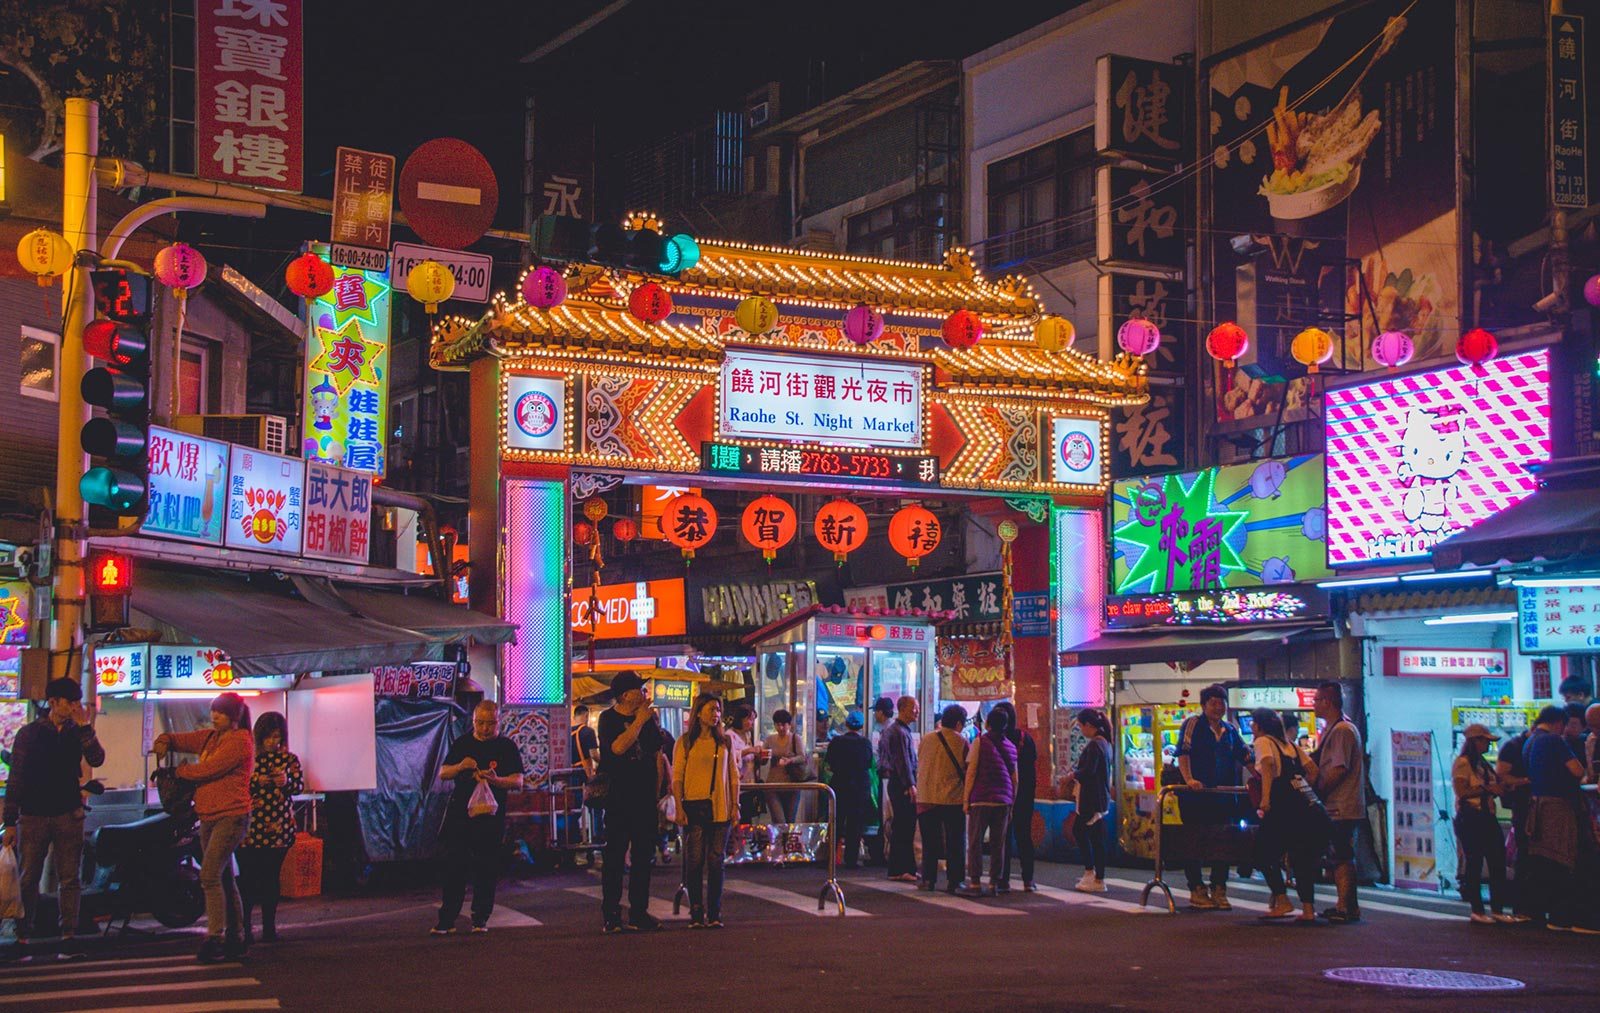 Entrance to Raohe Night Market, a popular street food spot in Taipei, Taiwan China